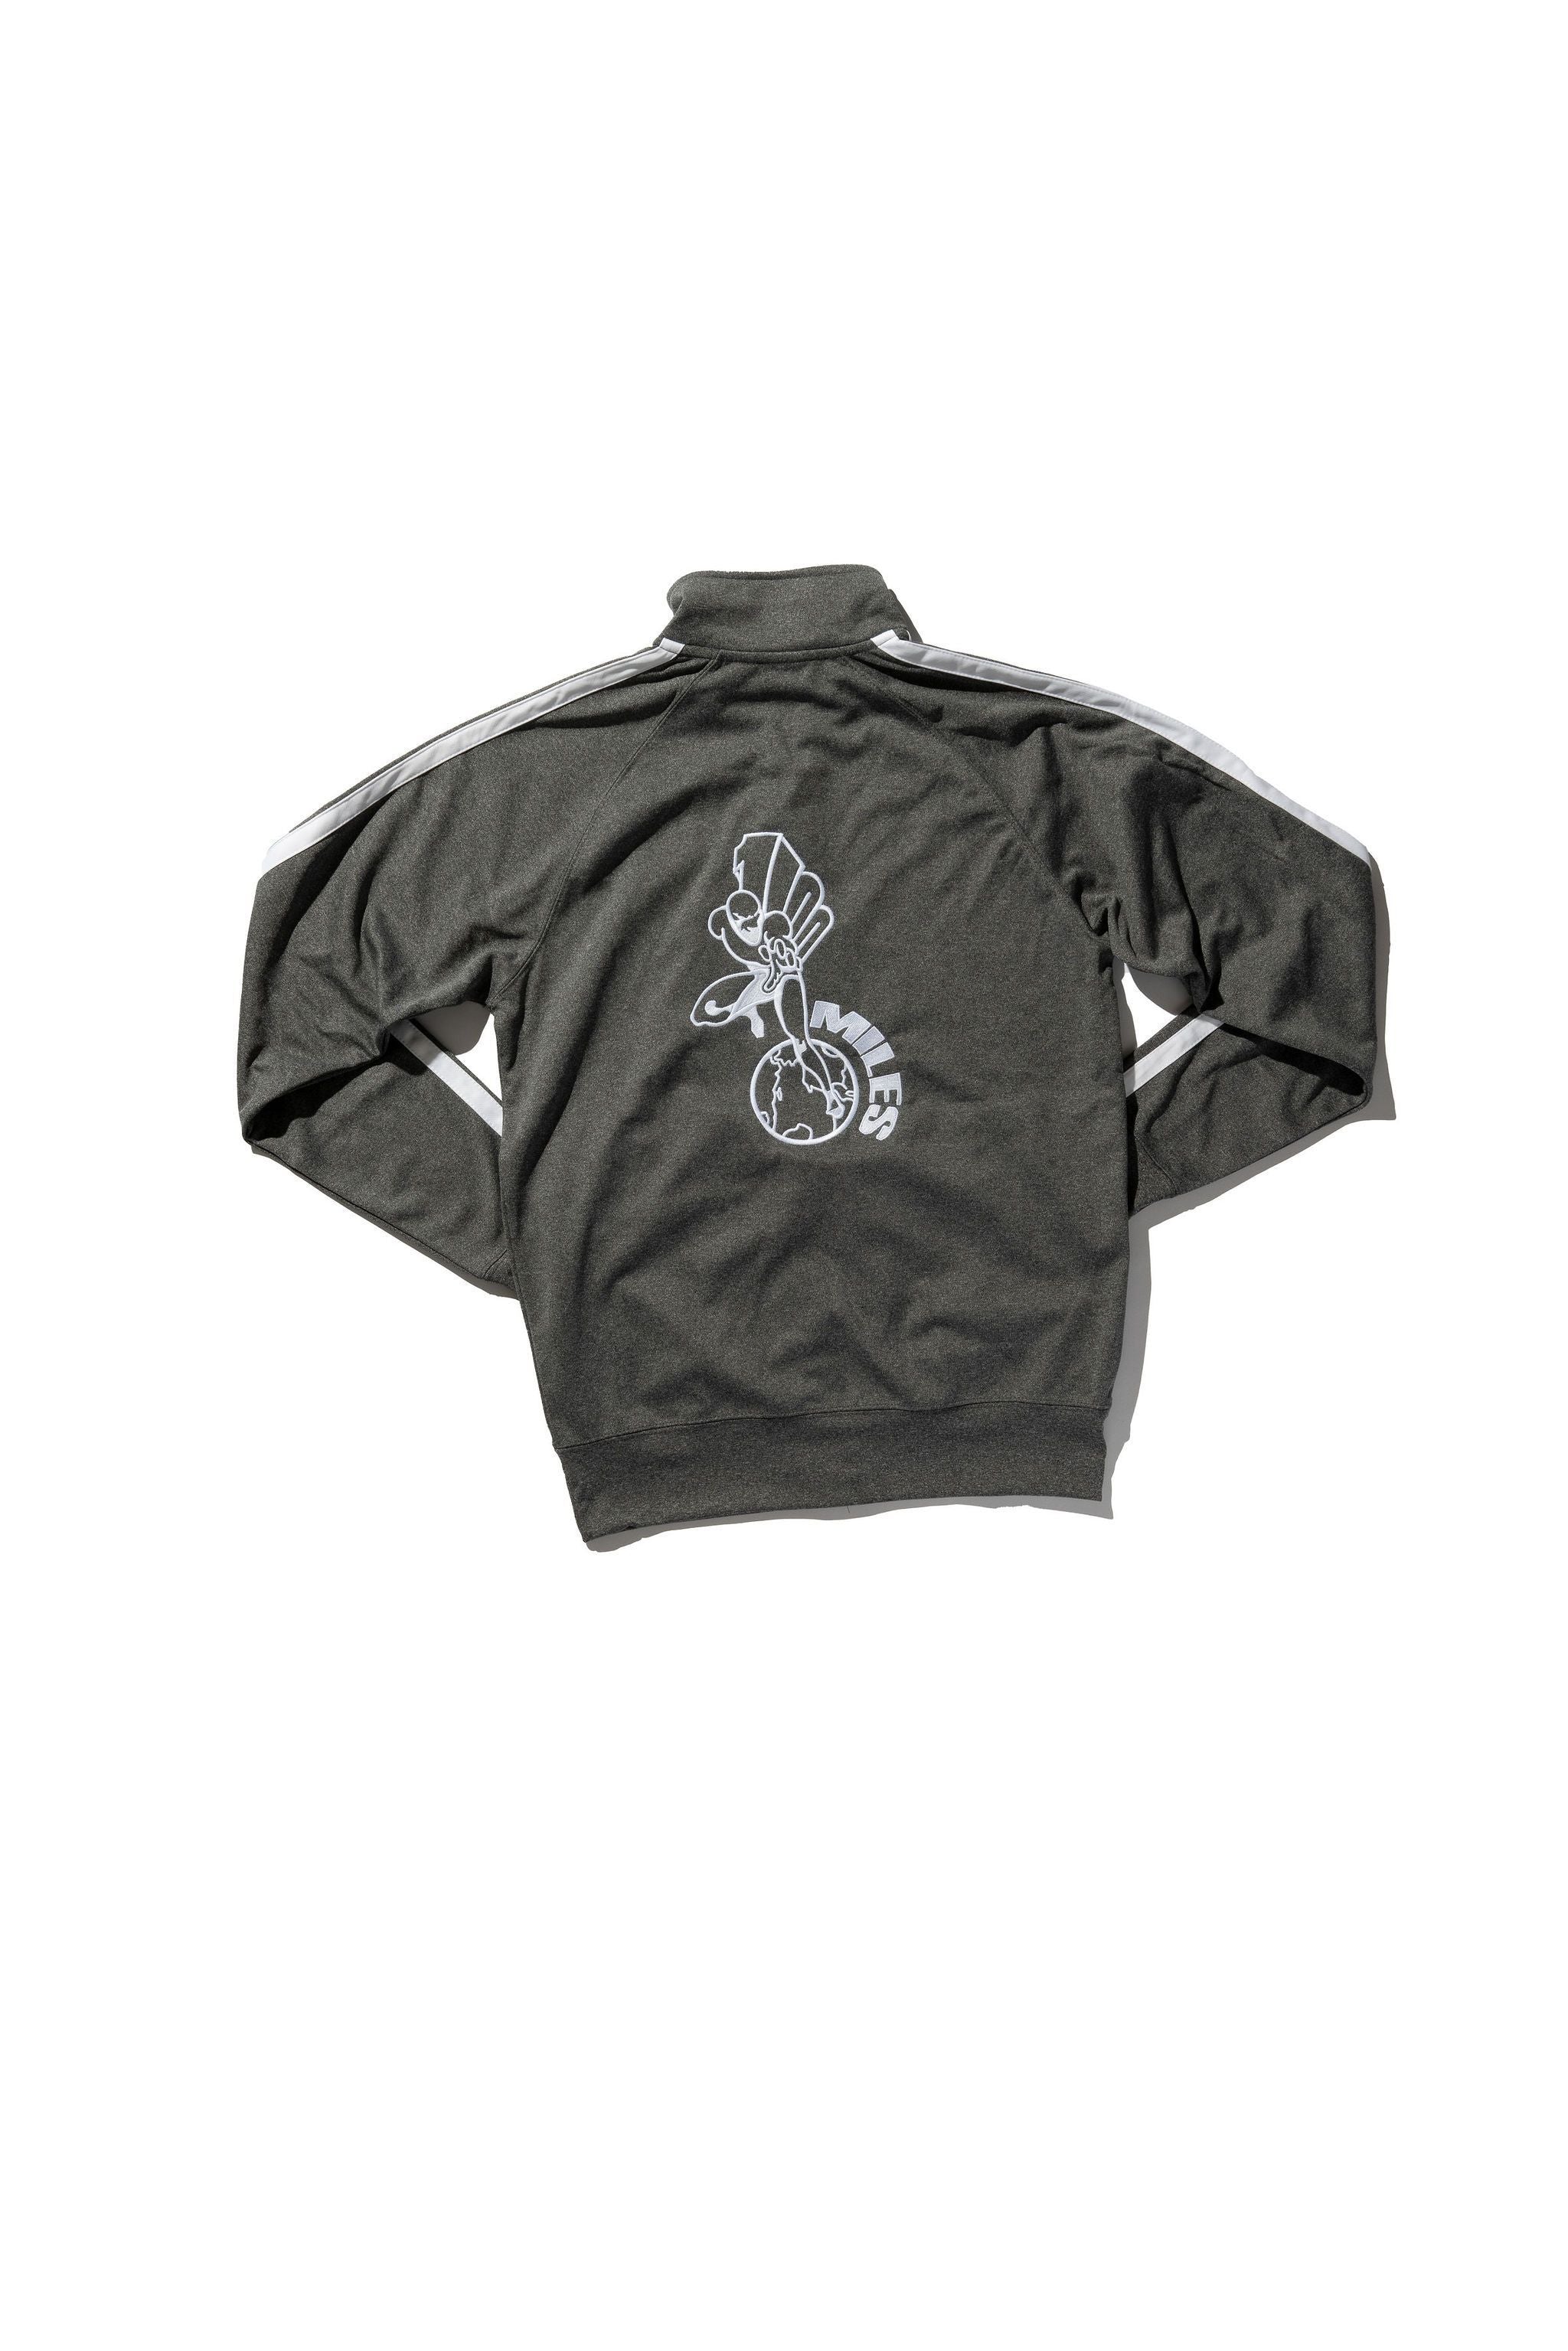 100 Miles gunmetal heather original logo unisex lightweight poly-tech track jacket